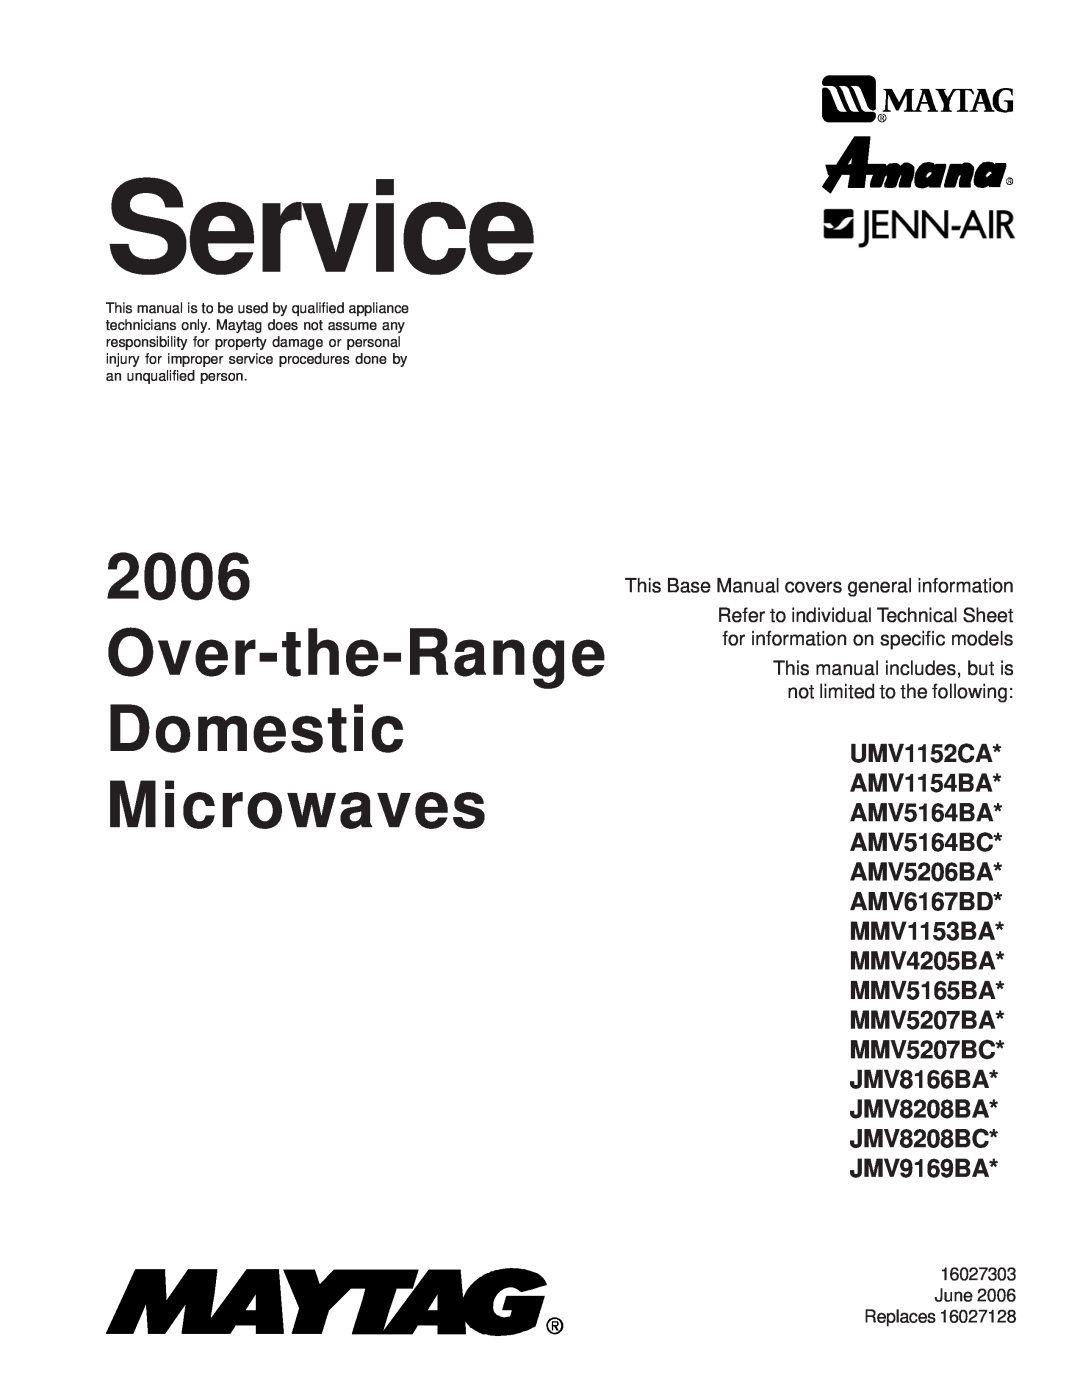 Maytag manual Service, UMV1152CA AMV1154BA AMV5164BA AMV5164BC AMV5206BA, Over-the-RangeDomestic Microwaves 